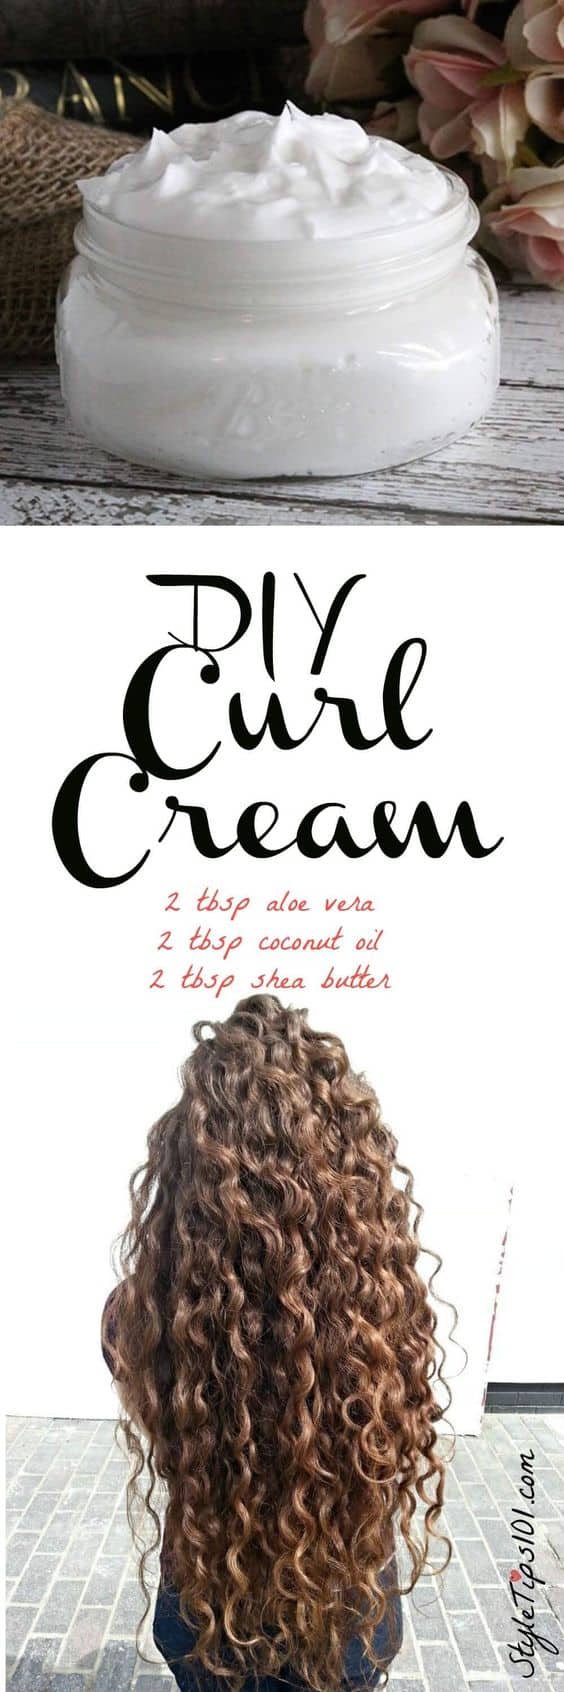 Marvelous Homemade Hair Recipes For Bouncy Curls